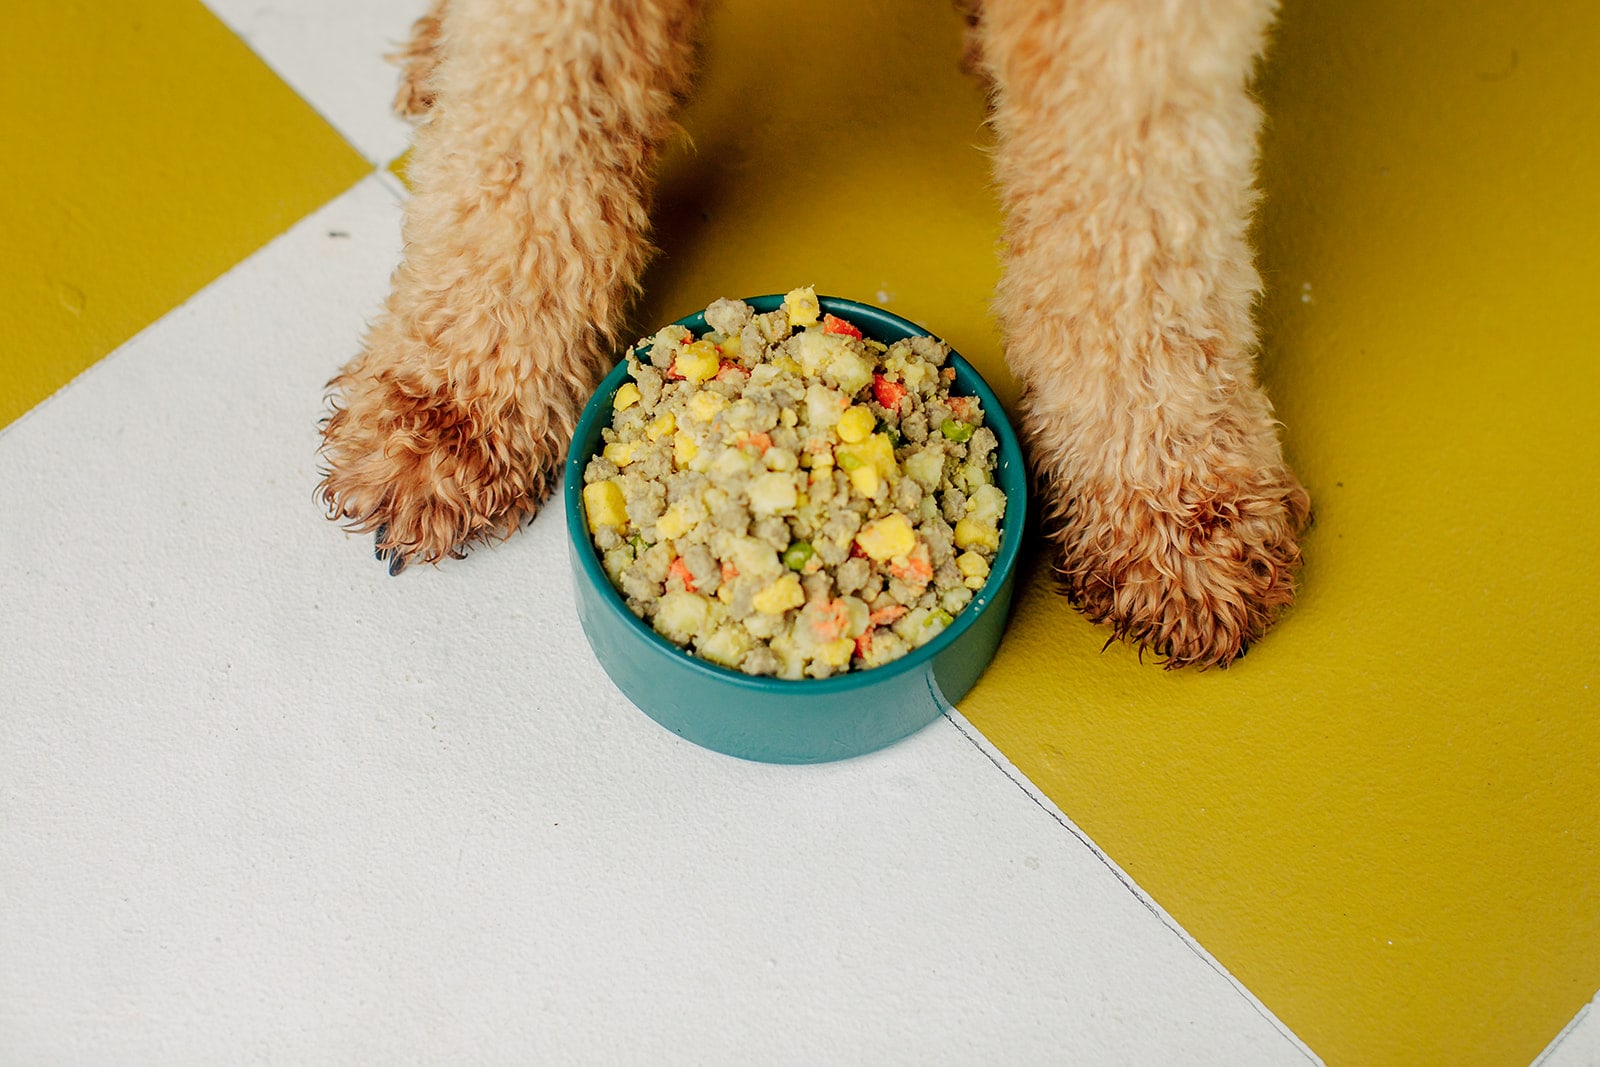 nom nom dog food in a bowl between paws